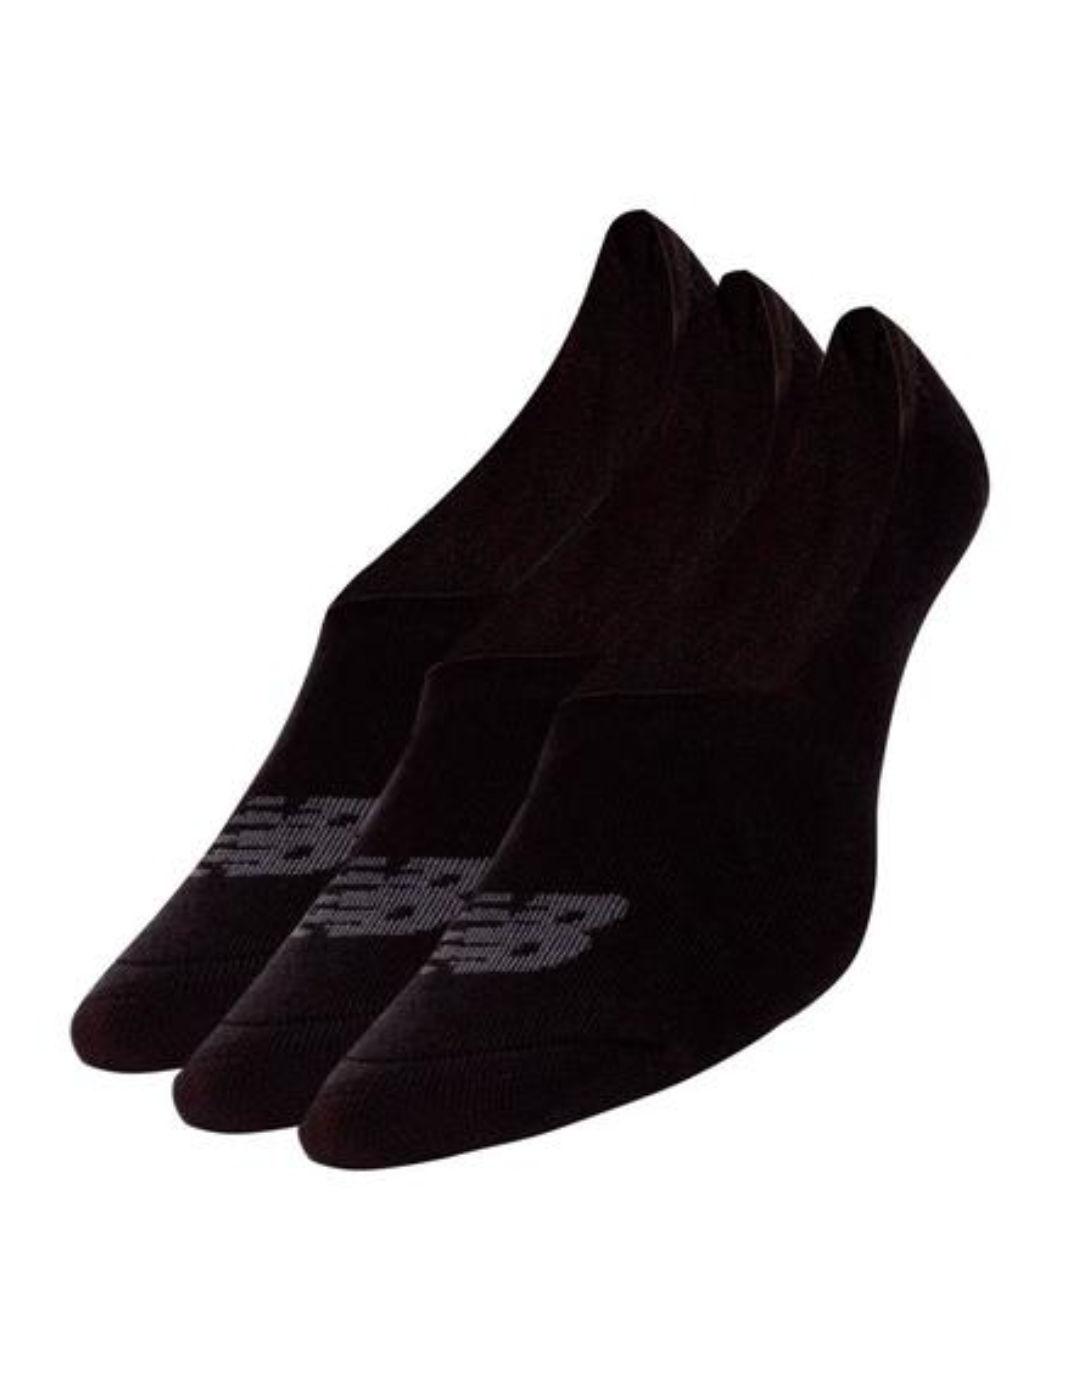 Pack 3 pares calcetines negros de hombre - Punto blanco